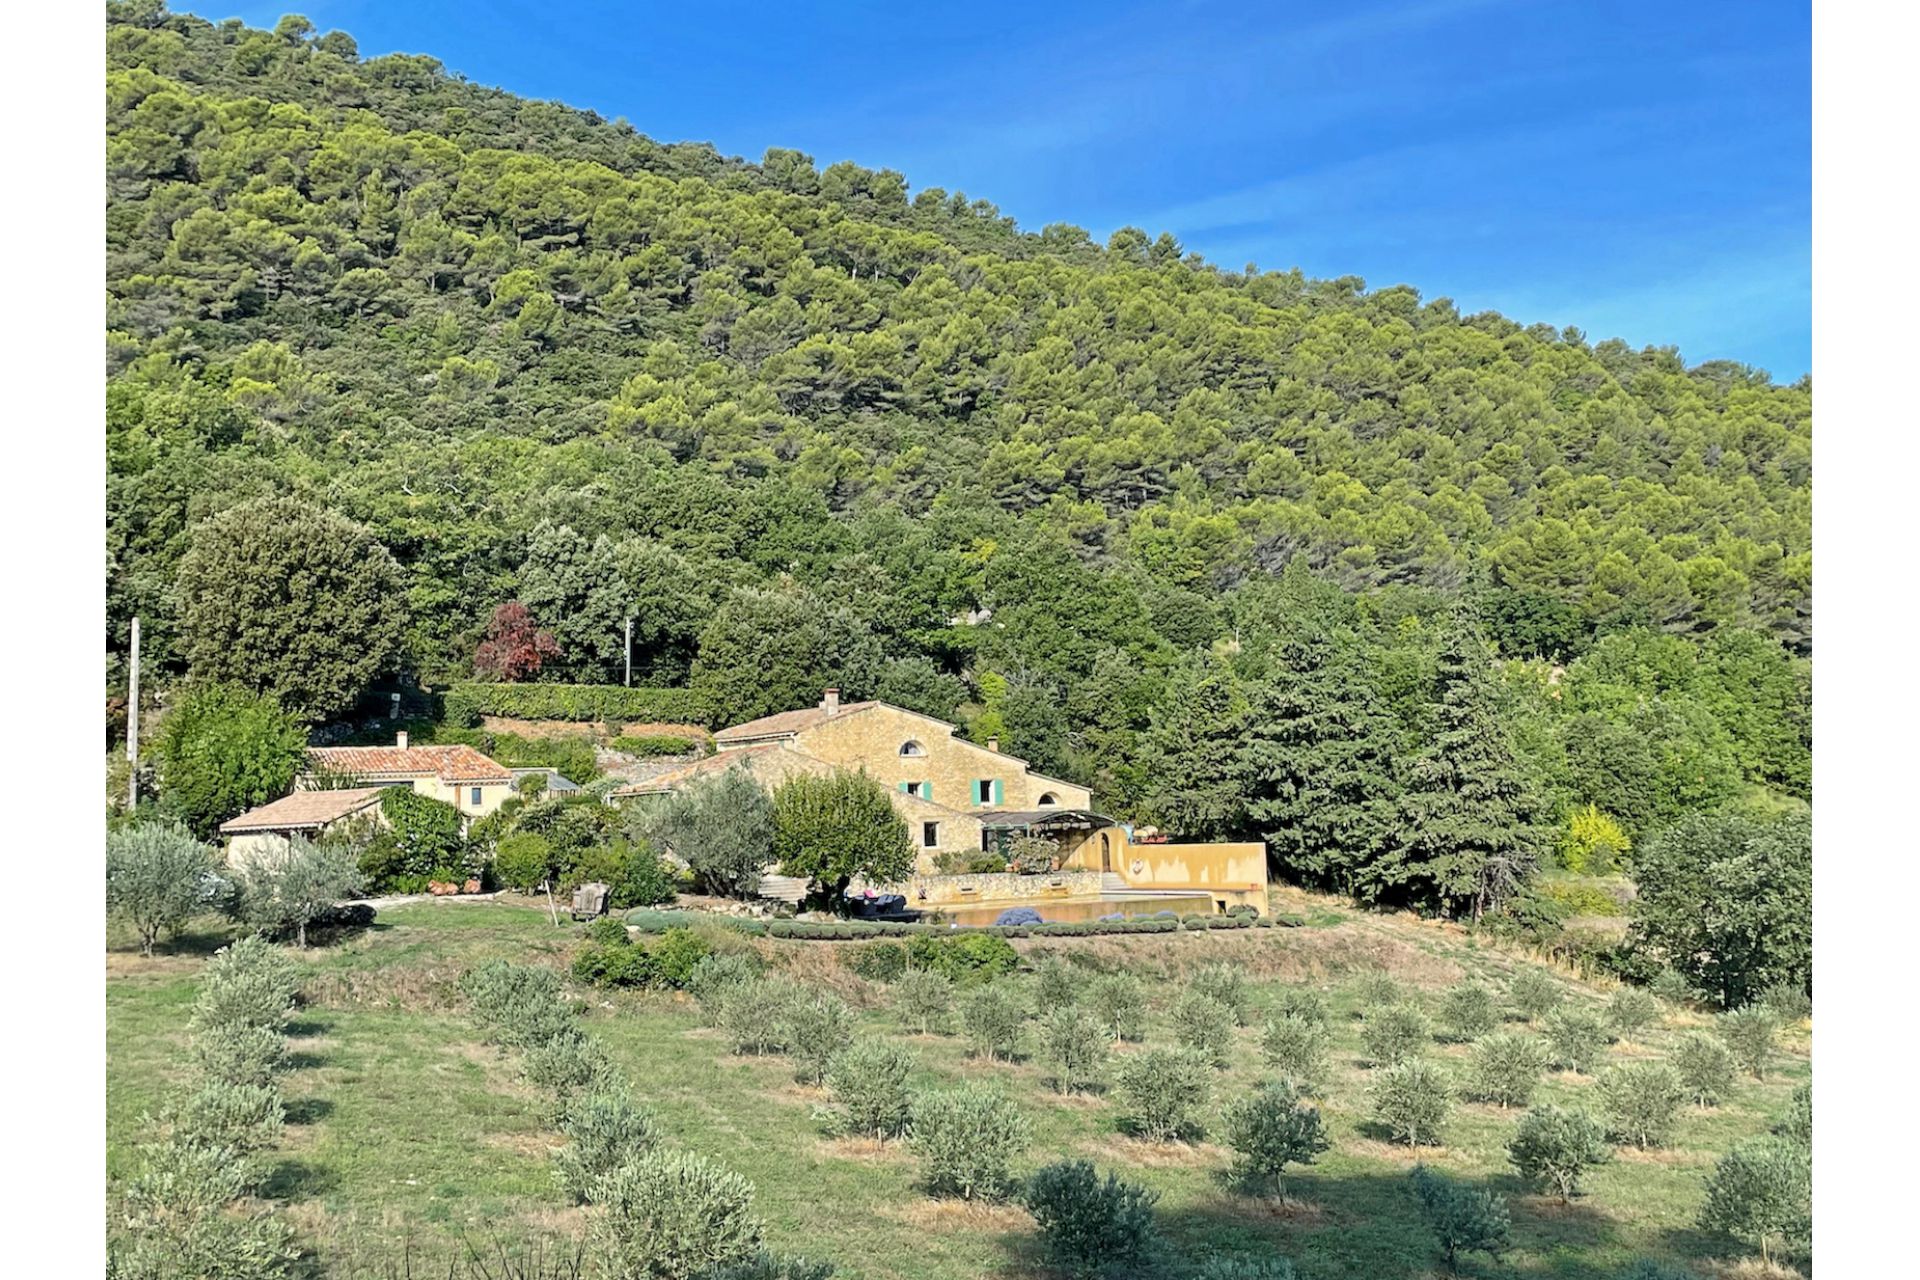 Méditerranée Location Bastide avec Piscine privée à Crestet, Provence